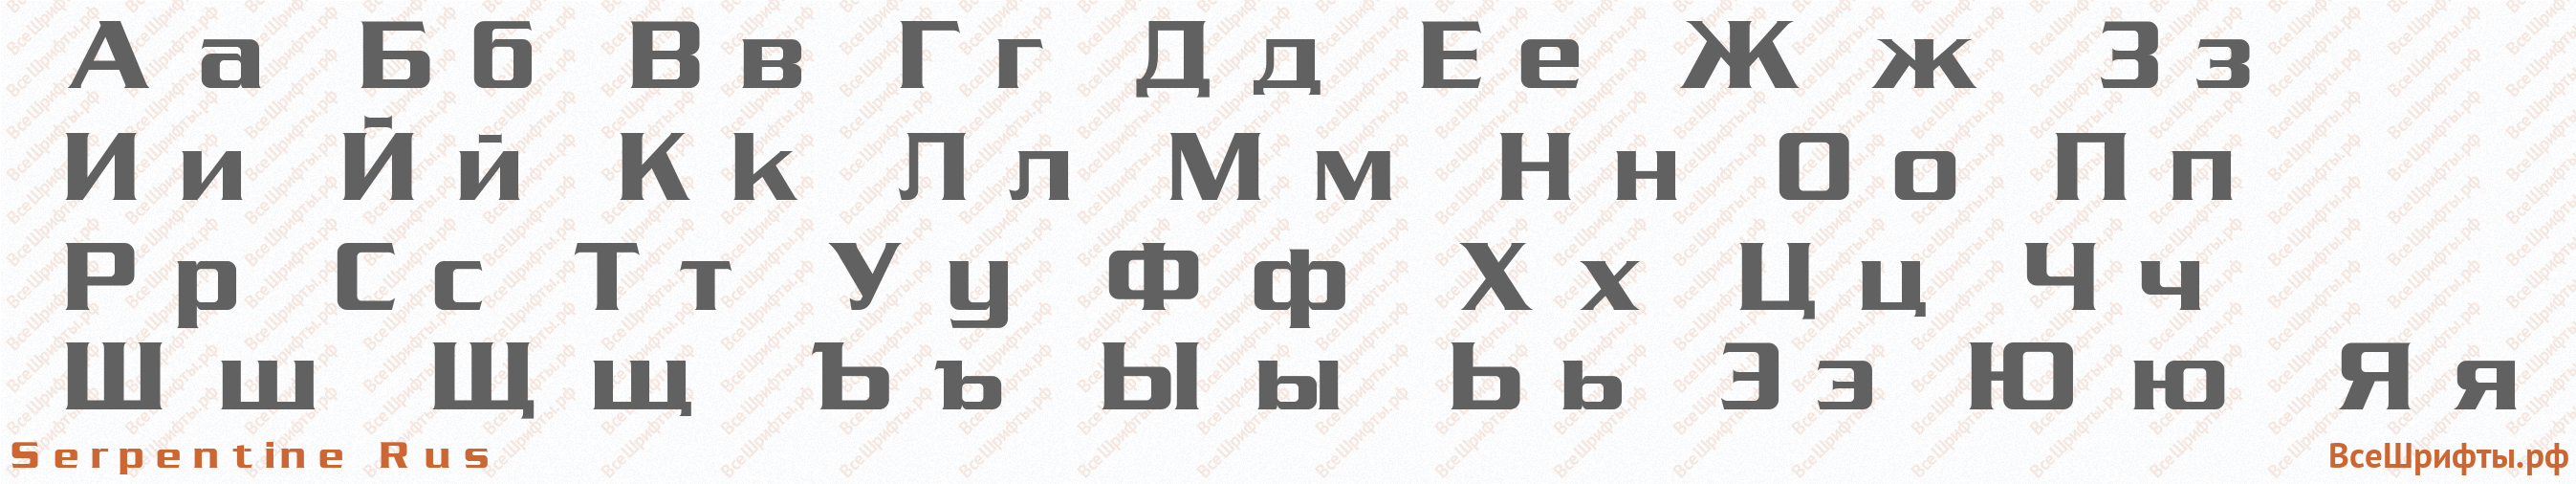 Шрифт Serpentine Rus с русскими буквами